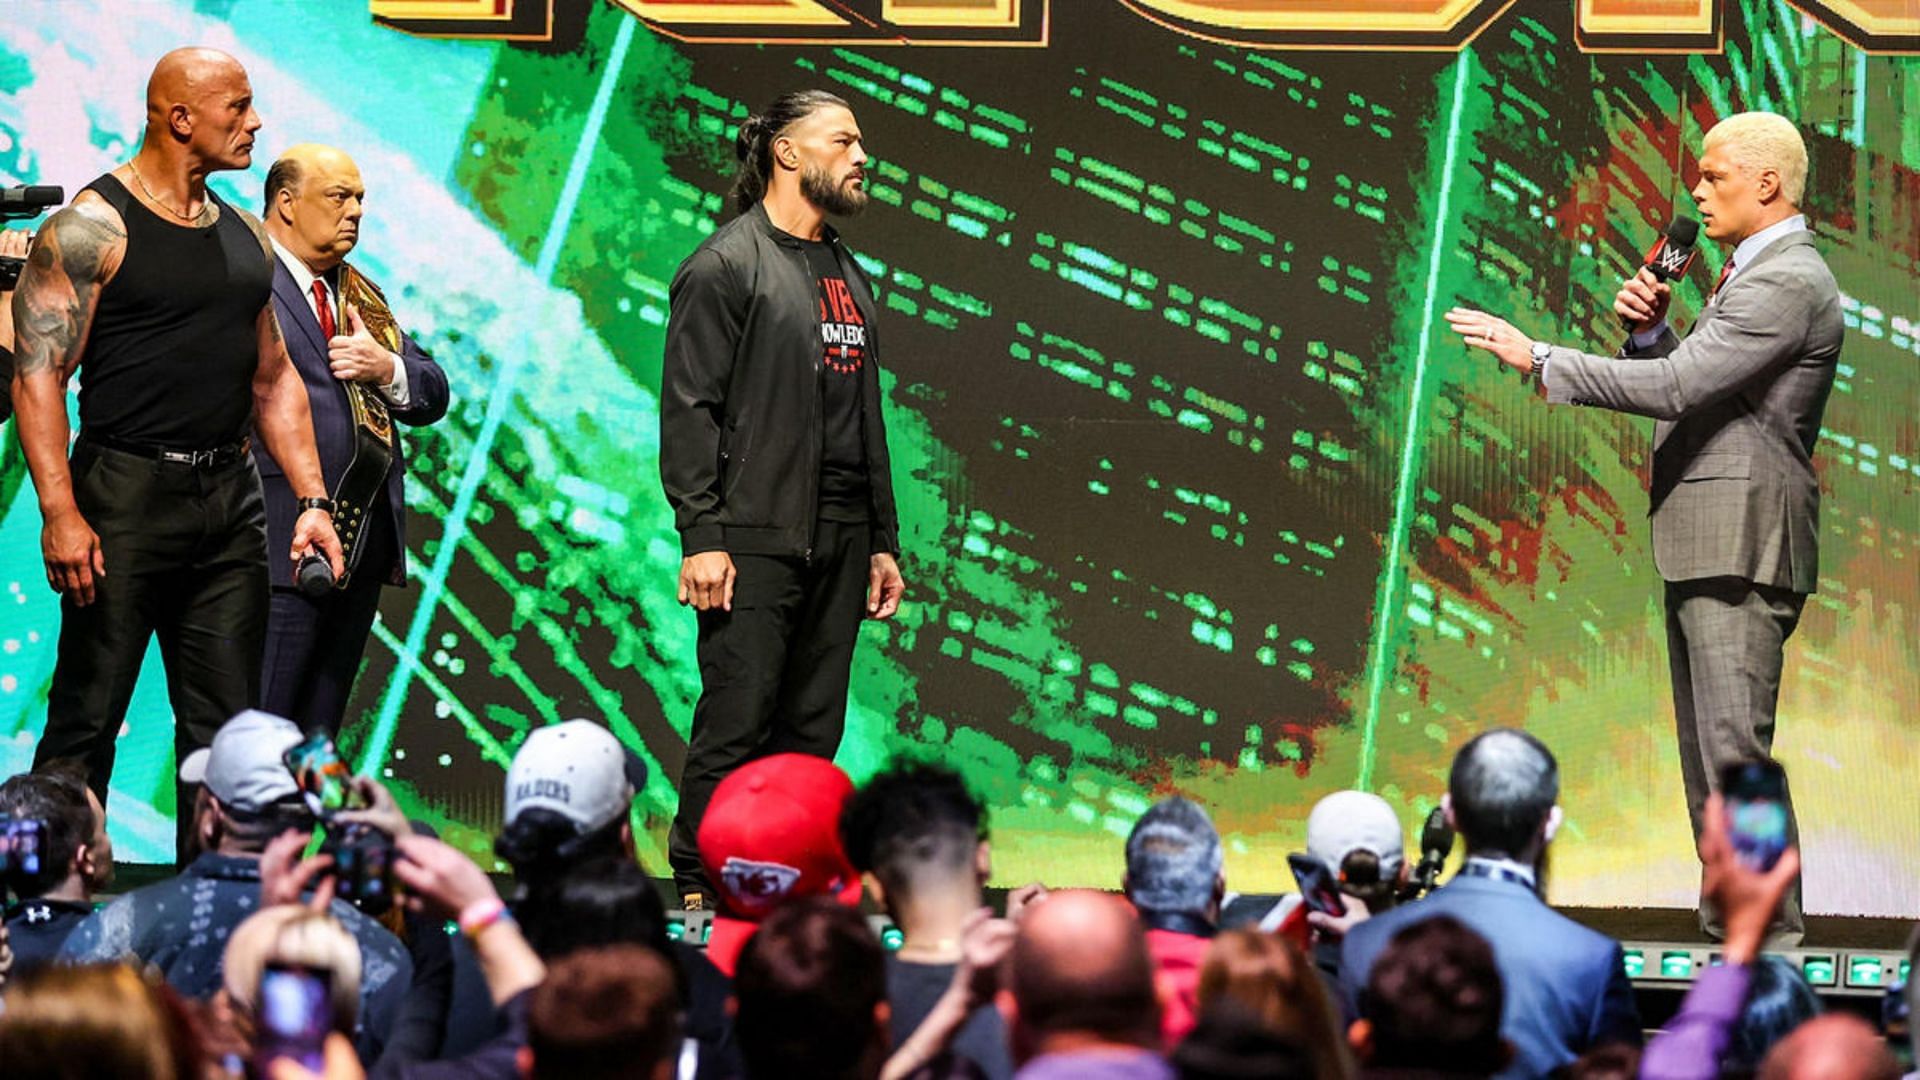 Cody Rhodes will challenge Roman Reigns at WWE WrestleMania XL